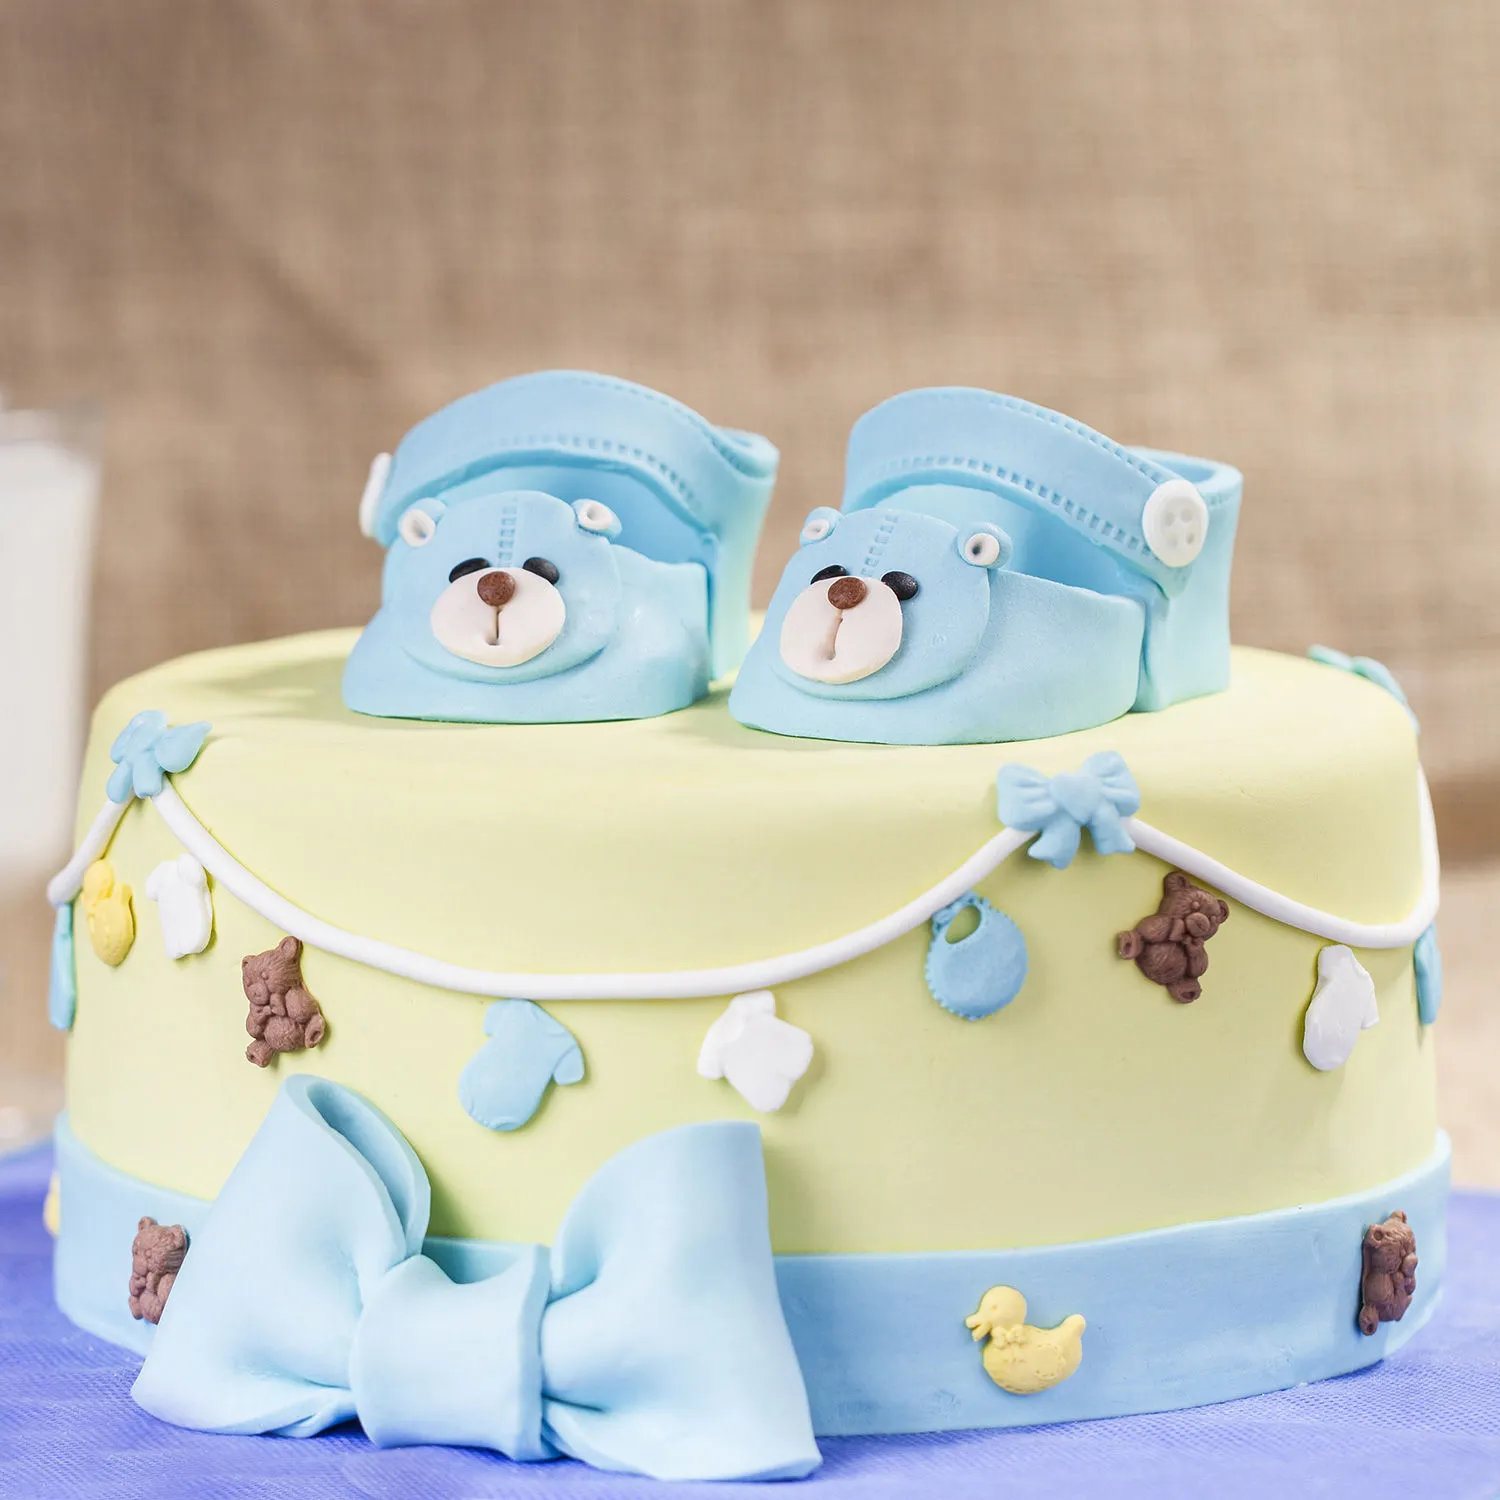 Blue Baby Shoes Truffle Cake - 2 KG